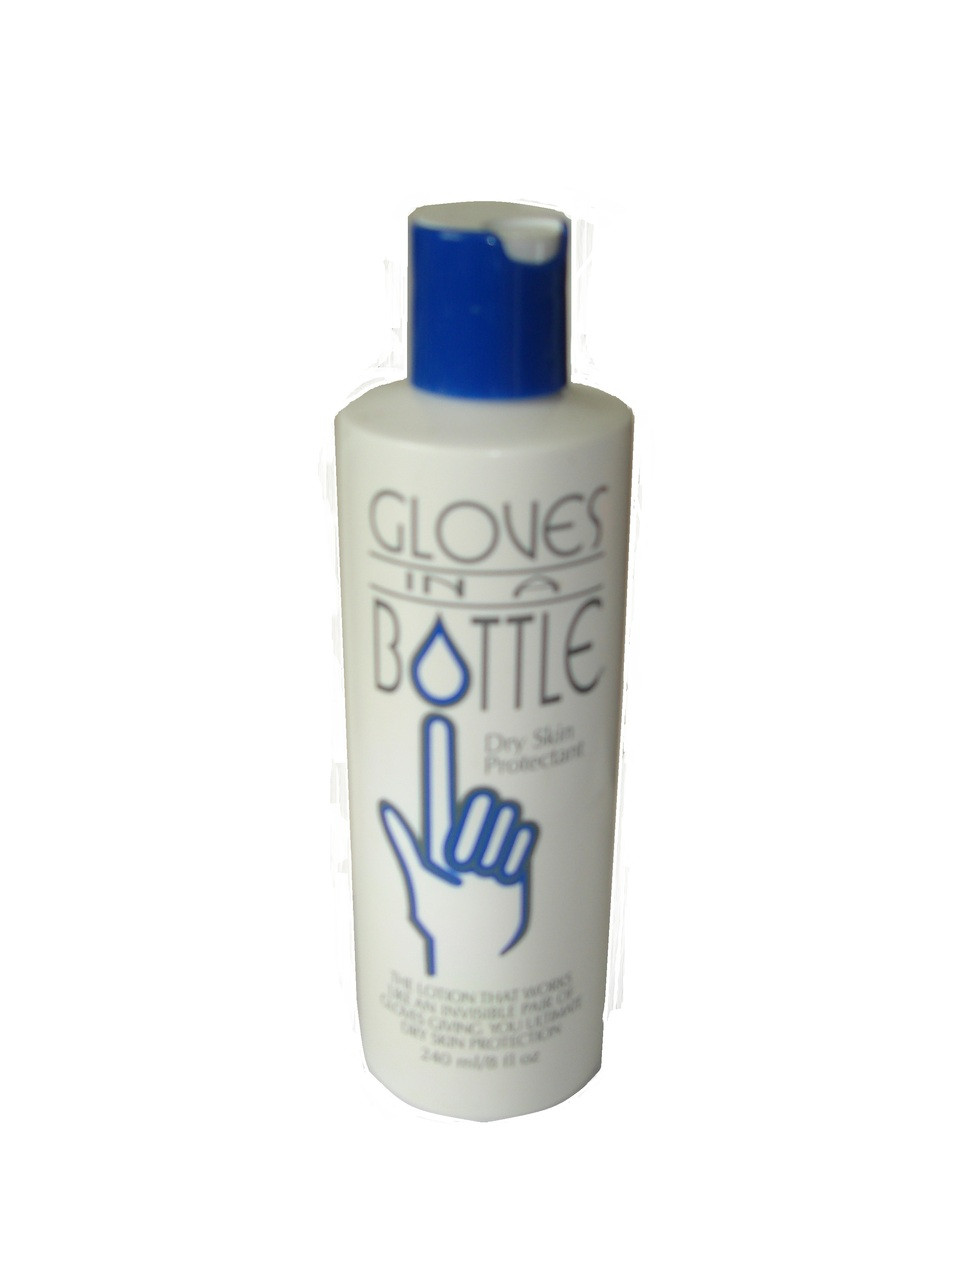 Gloves In A Bottle Dry Skin Protectant Lotion - 8 fl. Oz. - Viking